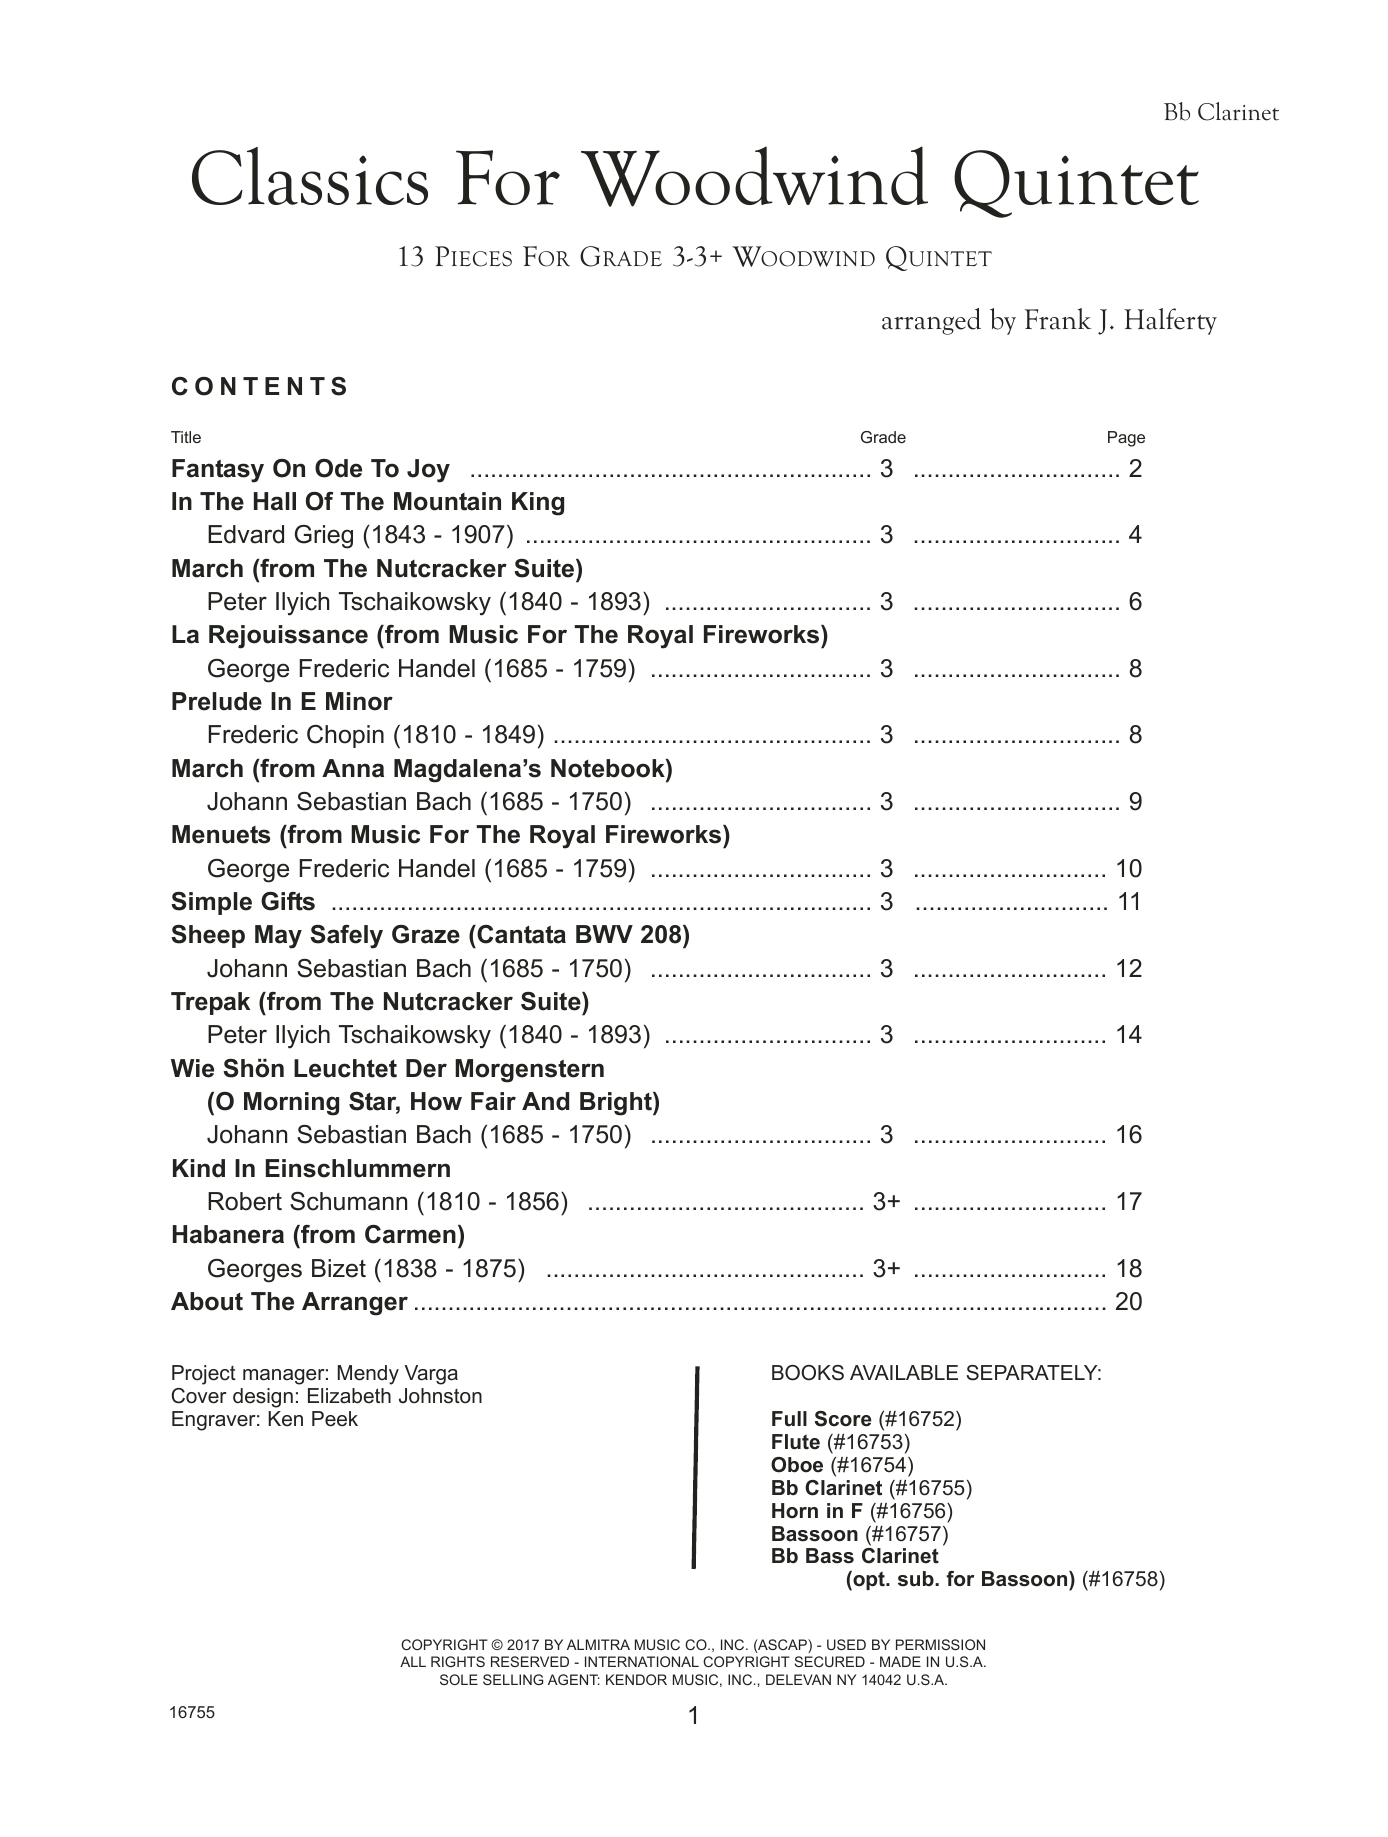 Download Frank J. Halferty Classics For Woodwind Quintet - Bb Clar Sheet Music